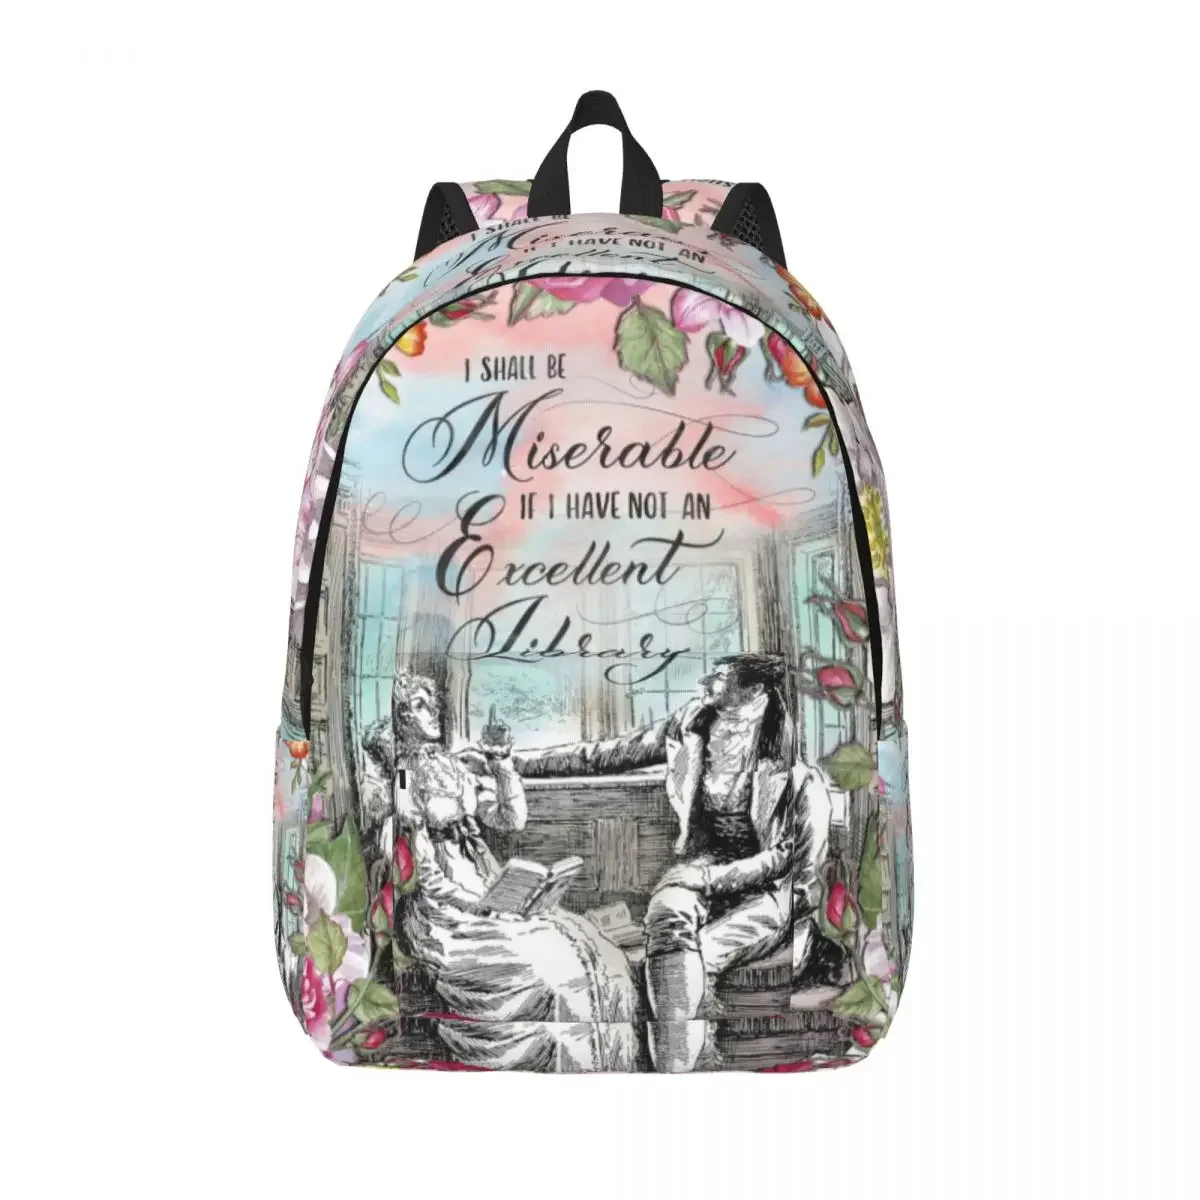 

Jane Austen Pride And Prejudice Travel Canvas Backpack Women Men School Laptop Bookbag College Student Daypack Bags